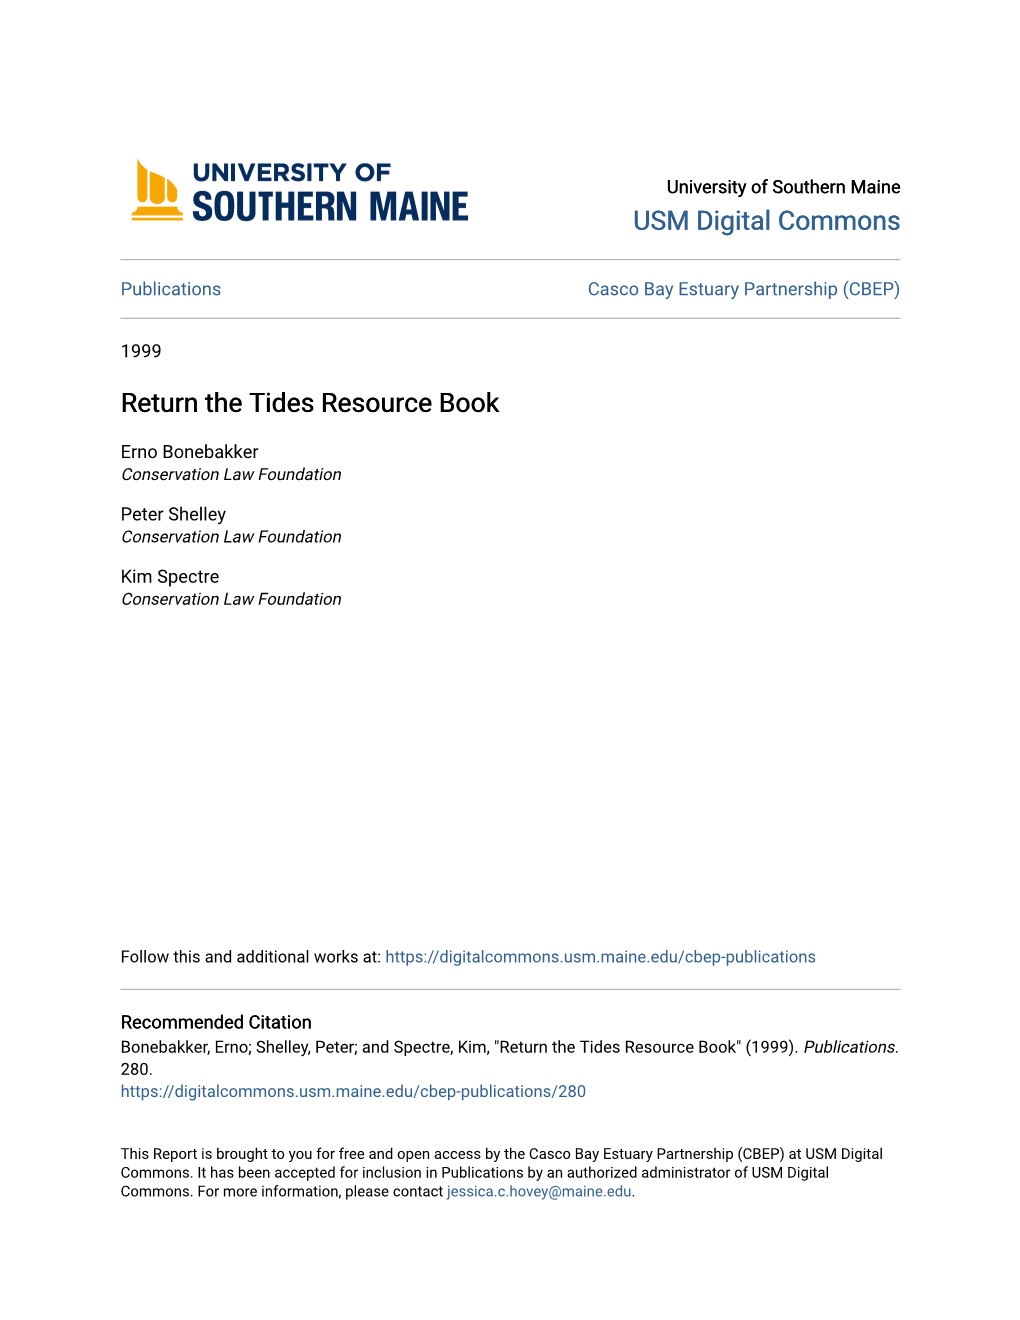 Return the Tides Resource Book